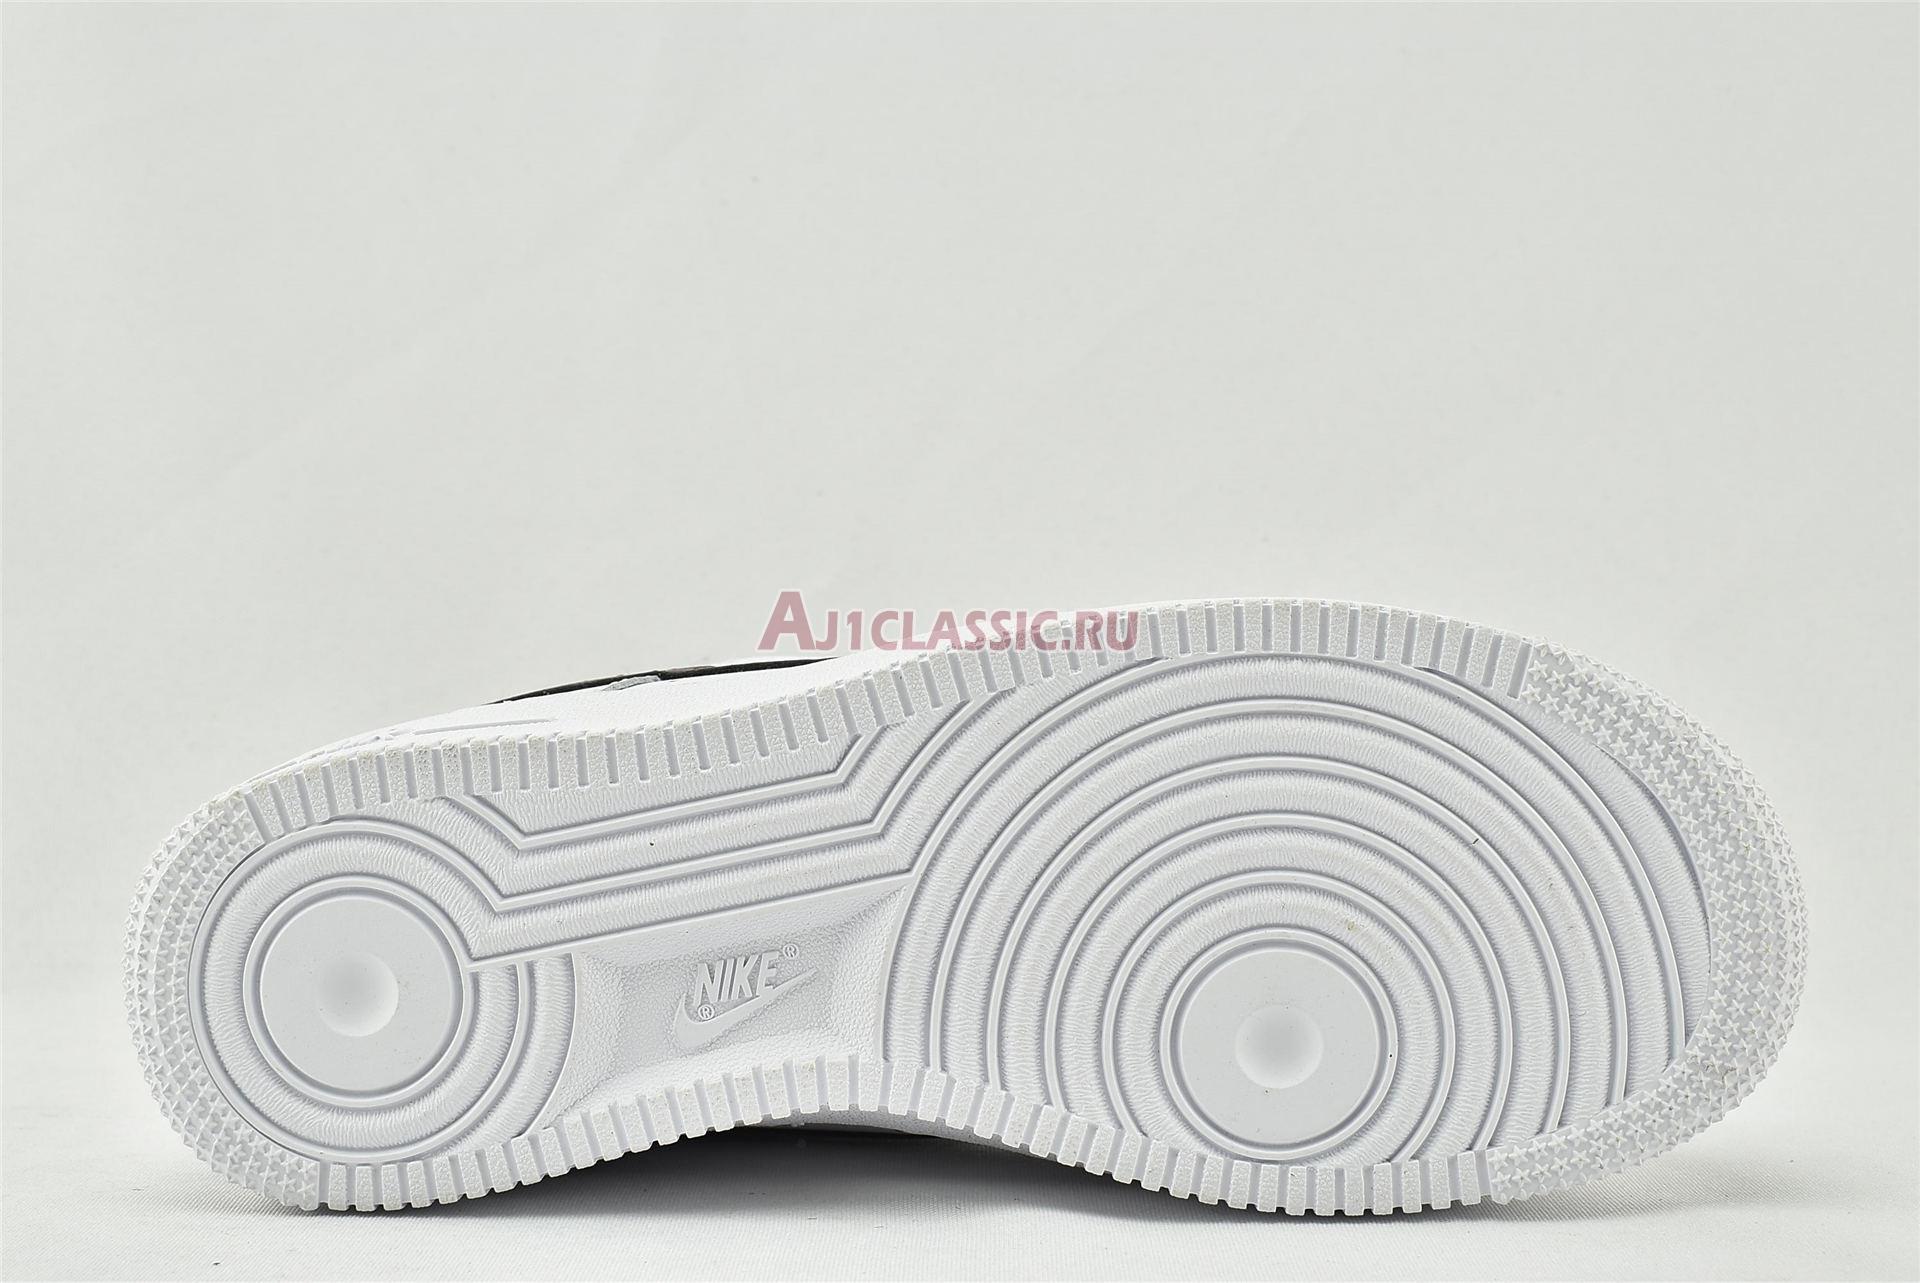 Nike 3M x Air Force 1 07 "White" CT2296-100